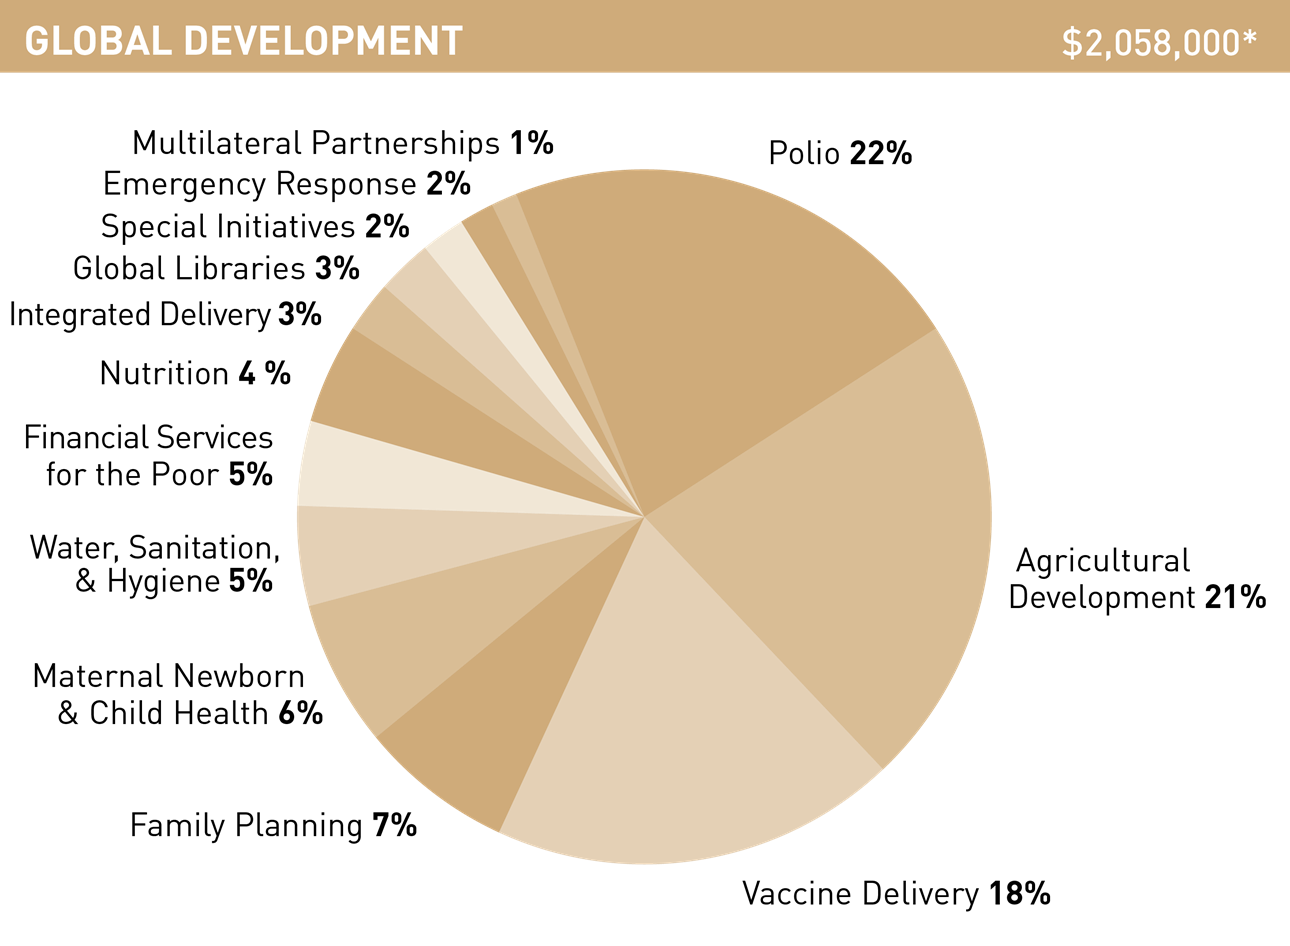 Gates Foundation Annual Report 2015 Global Development